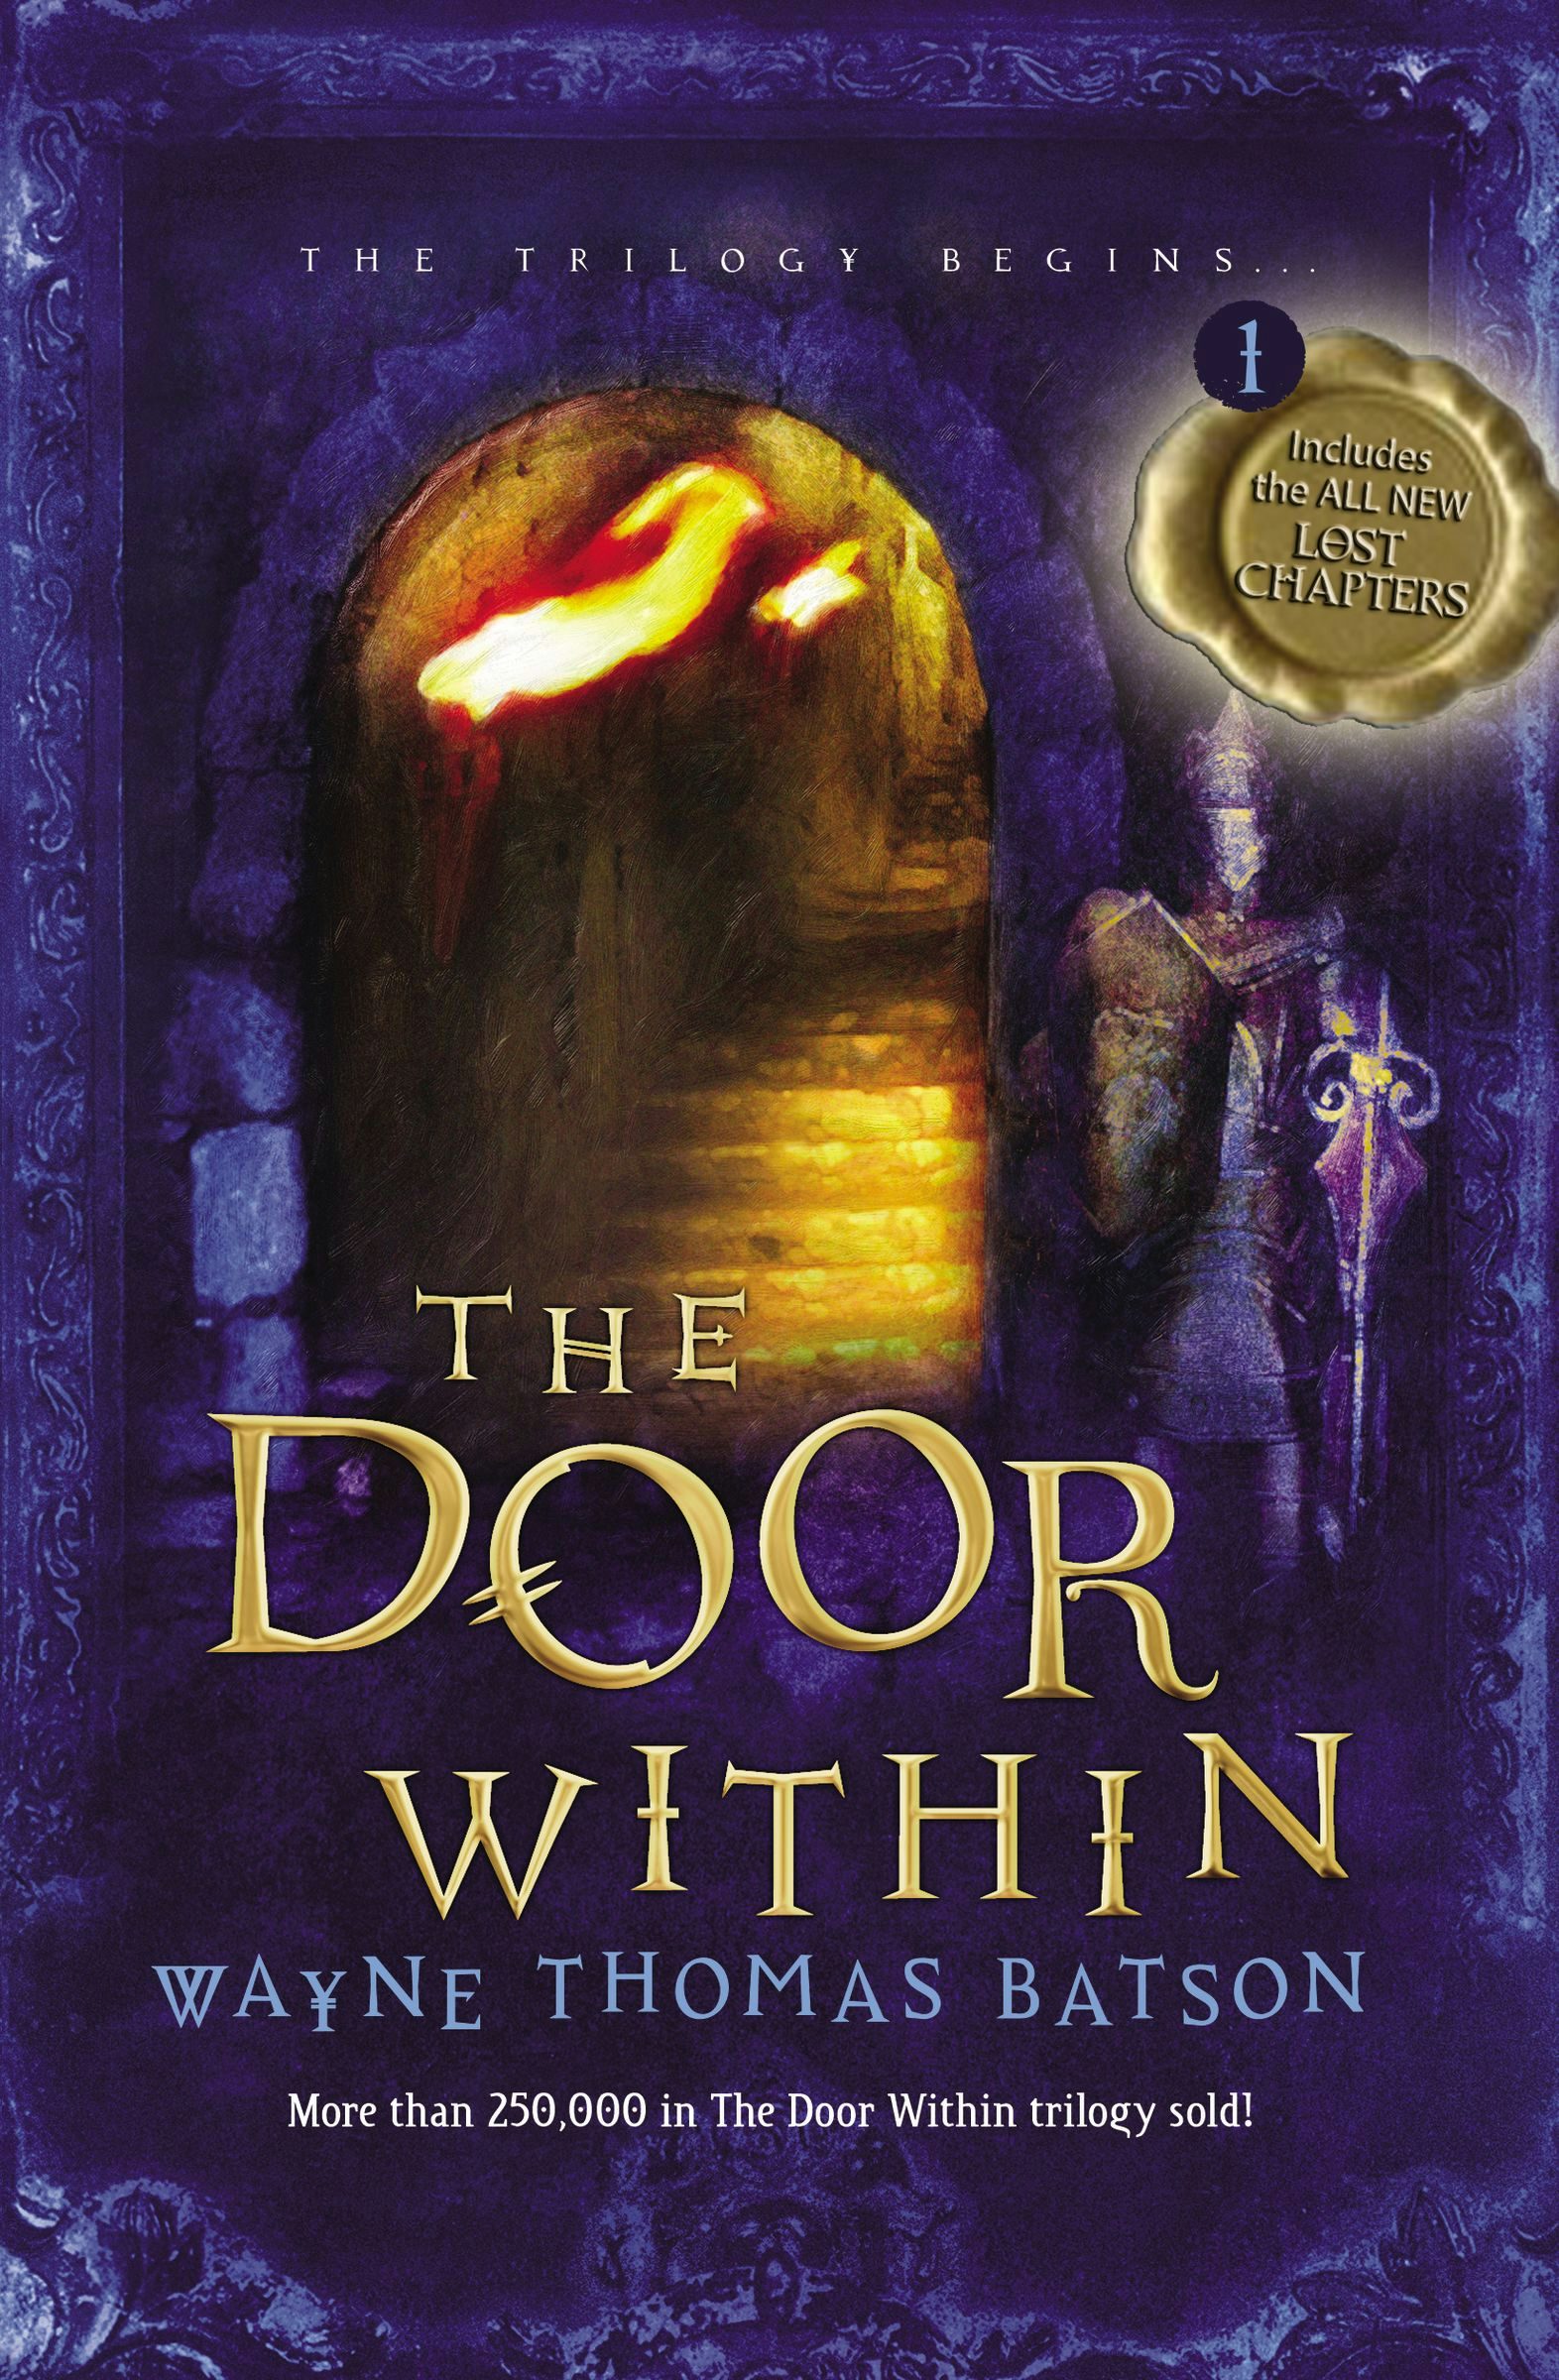 The Door Within by Wayne Thomas Batson